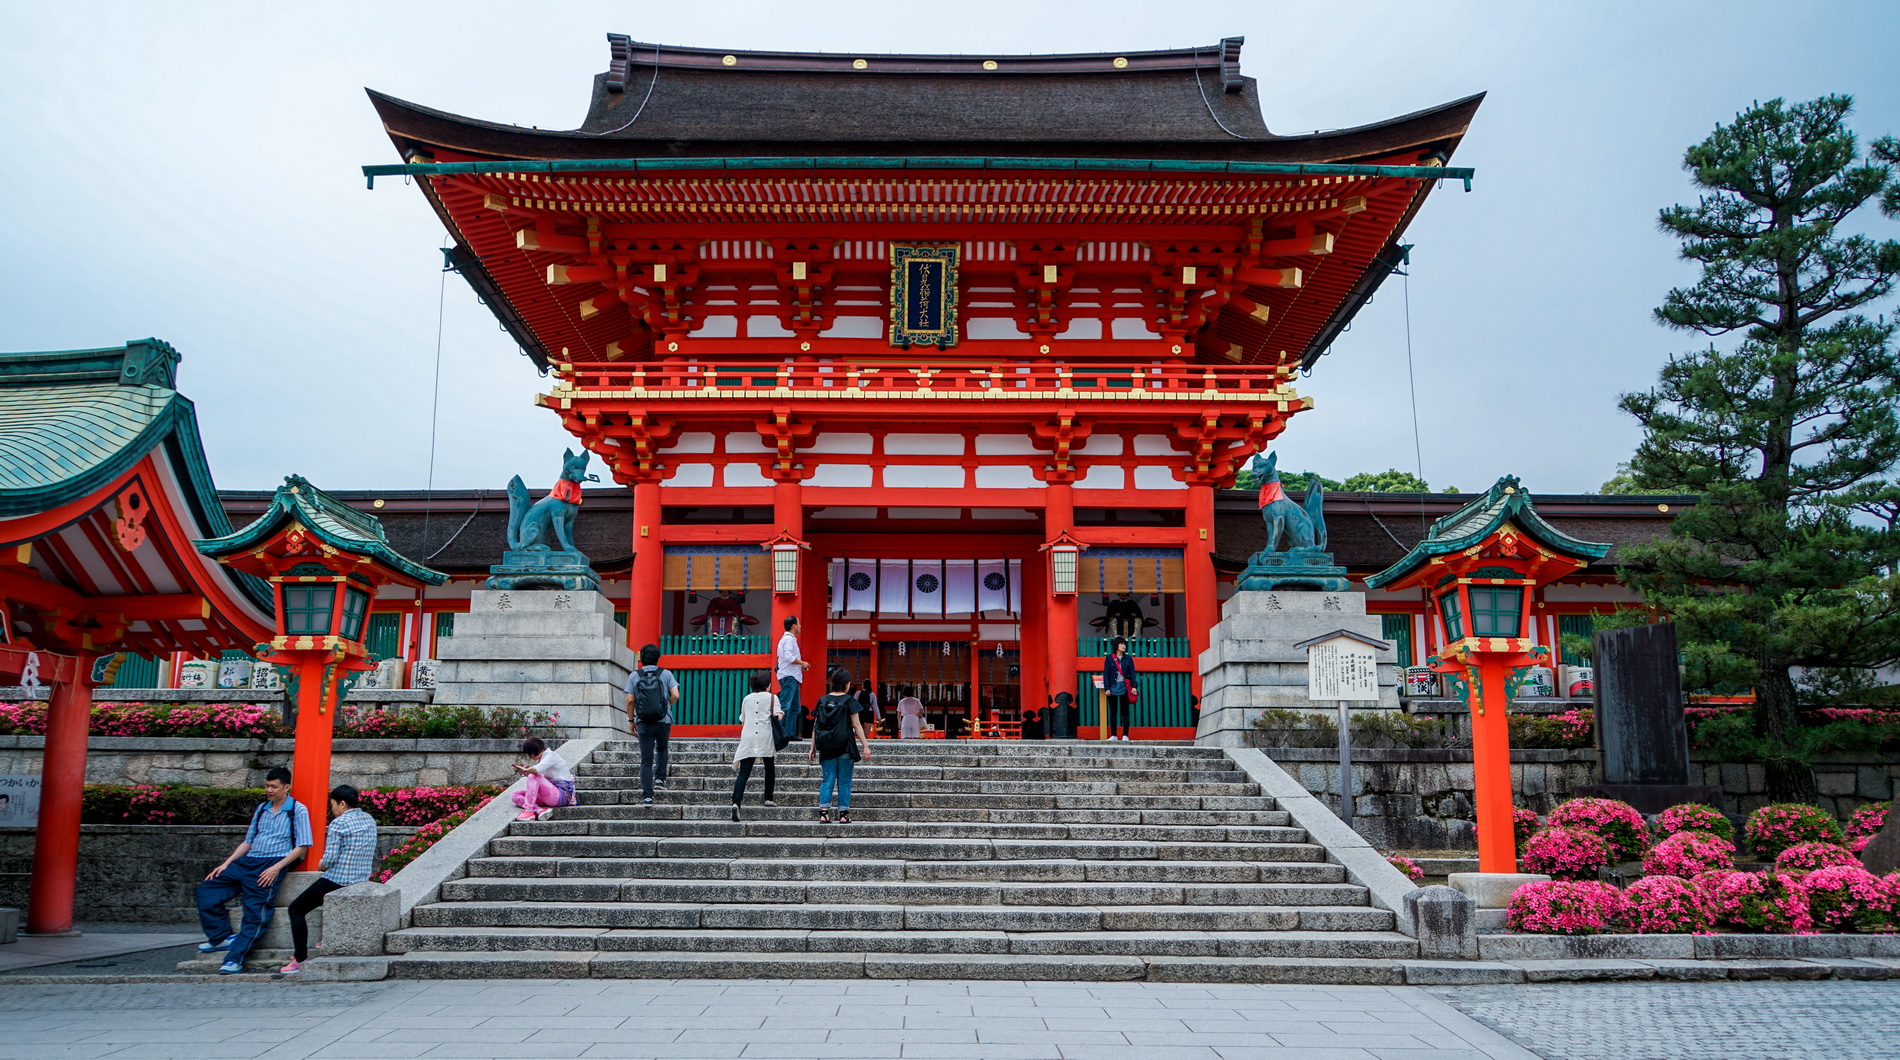 Must visit in Kyoto